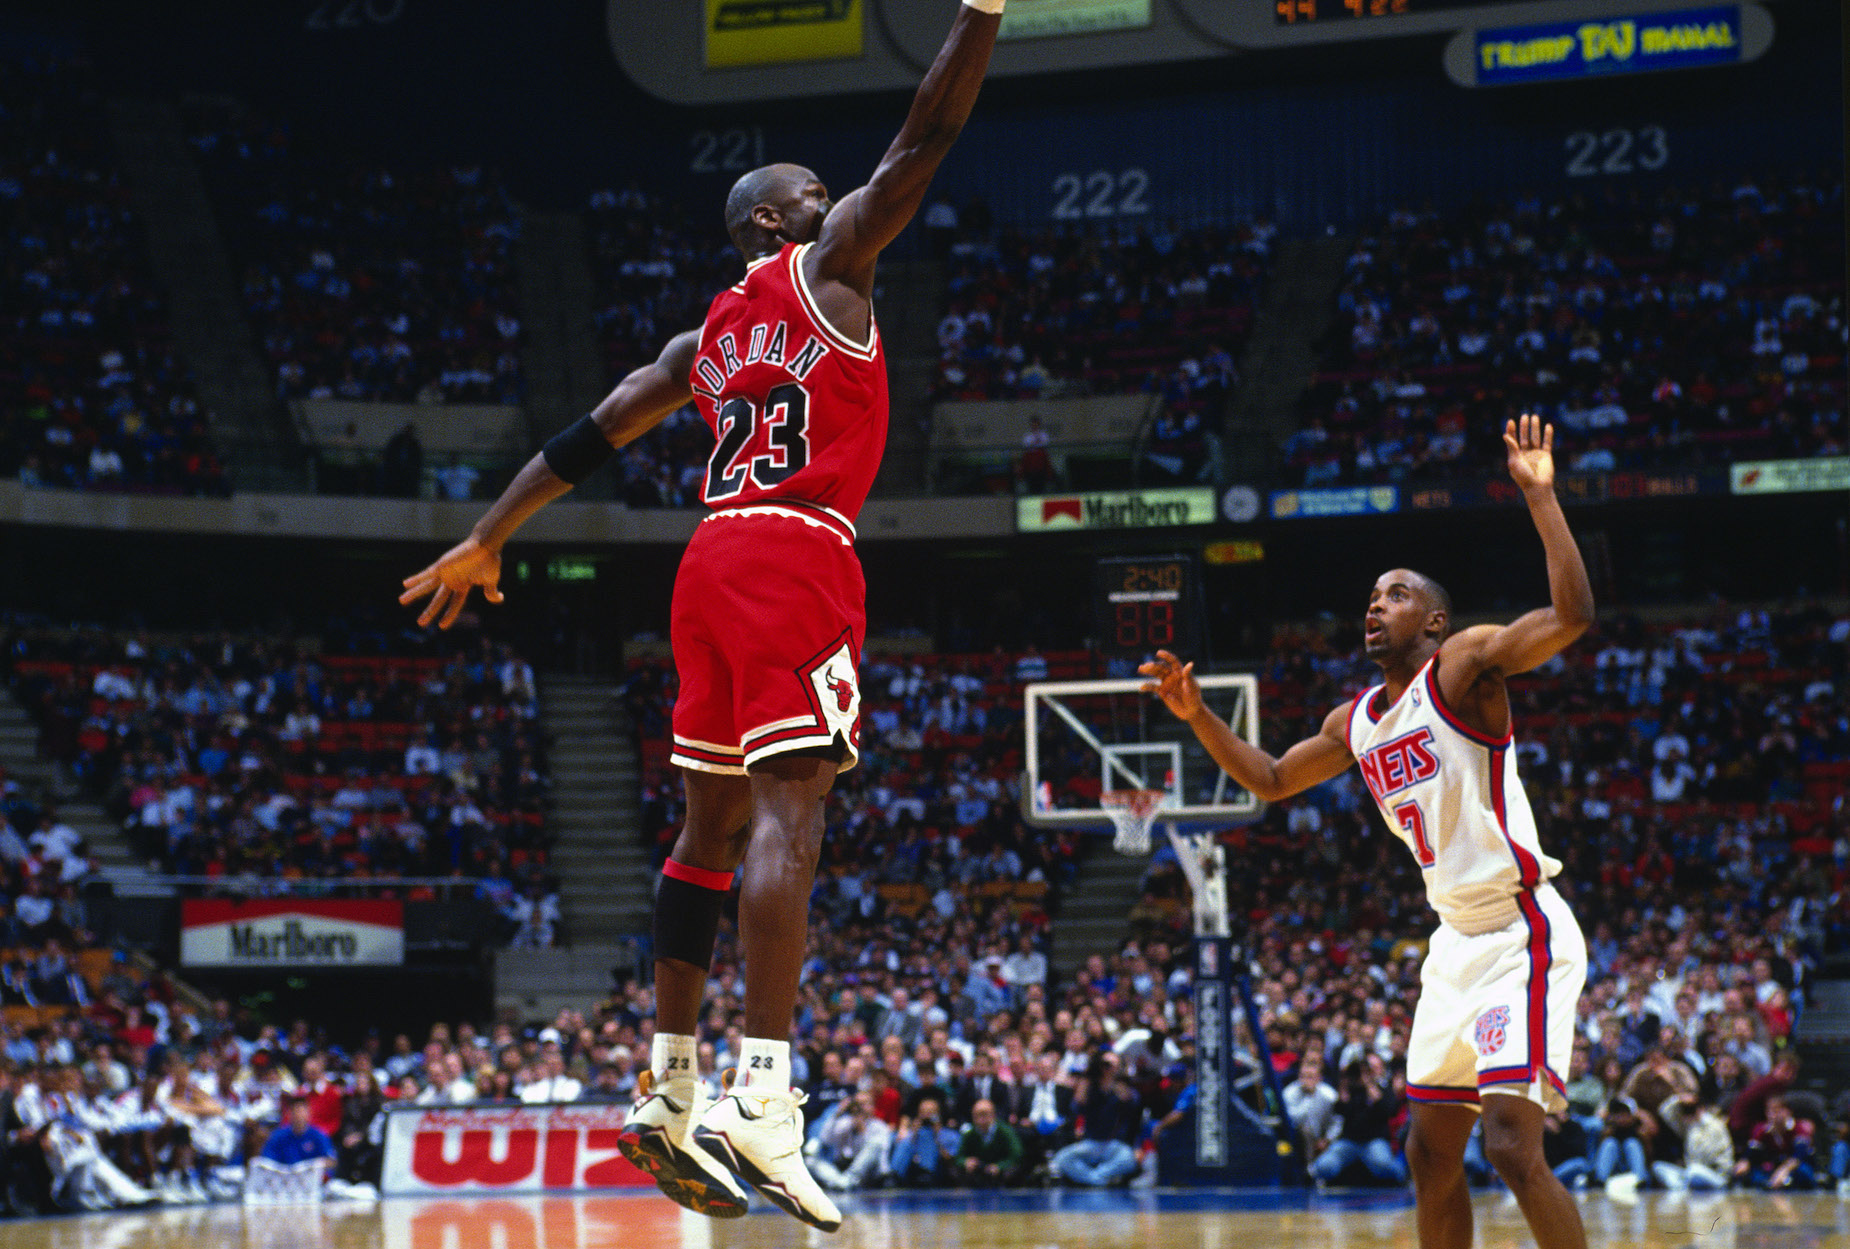 Chicago Bulls star Michael Jordan leaping during 1993 NBA action.